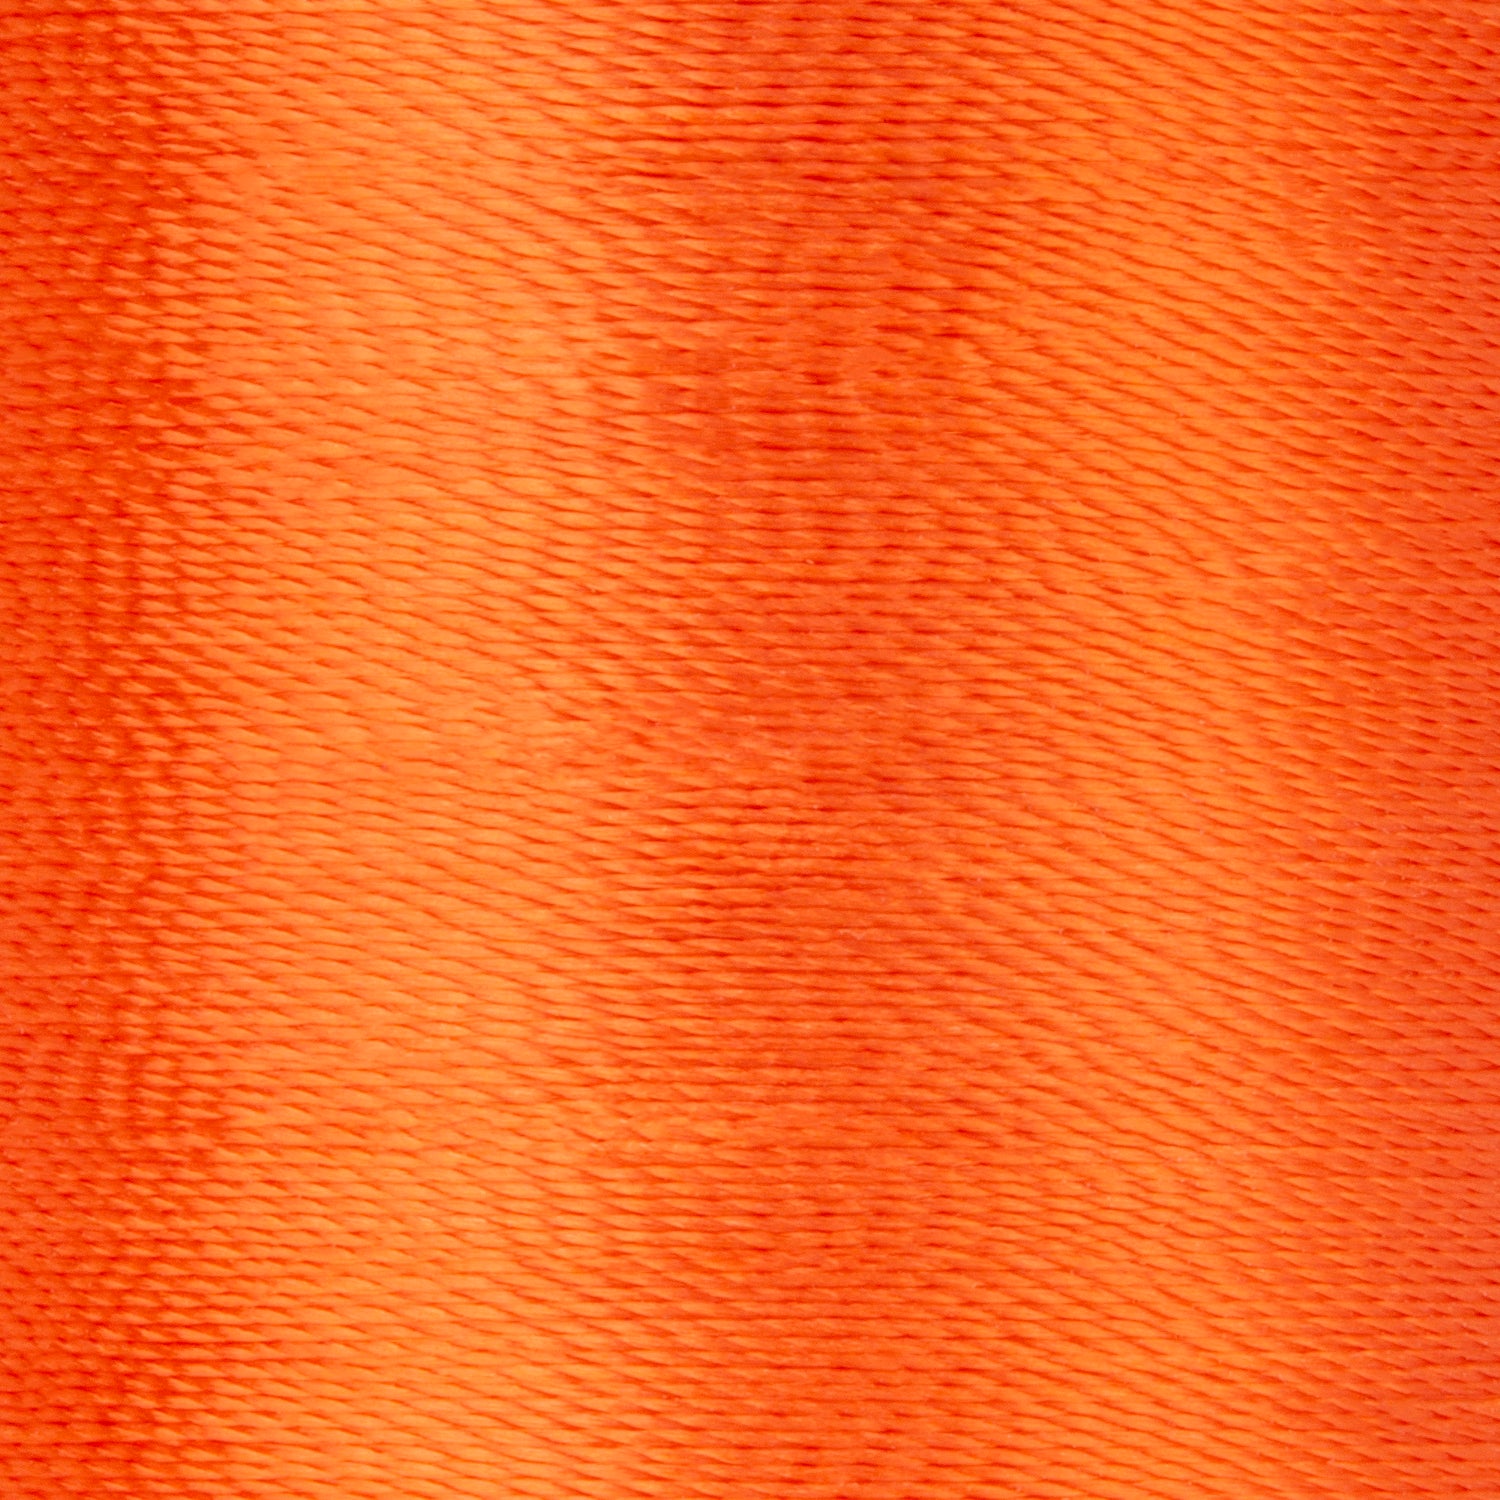 Coats & Clark Eloflex Stretchable Thread Orange